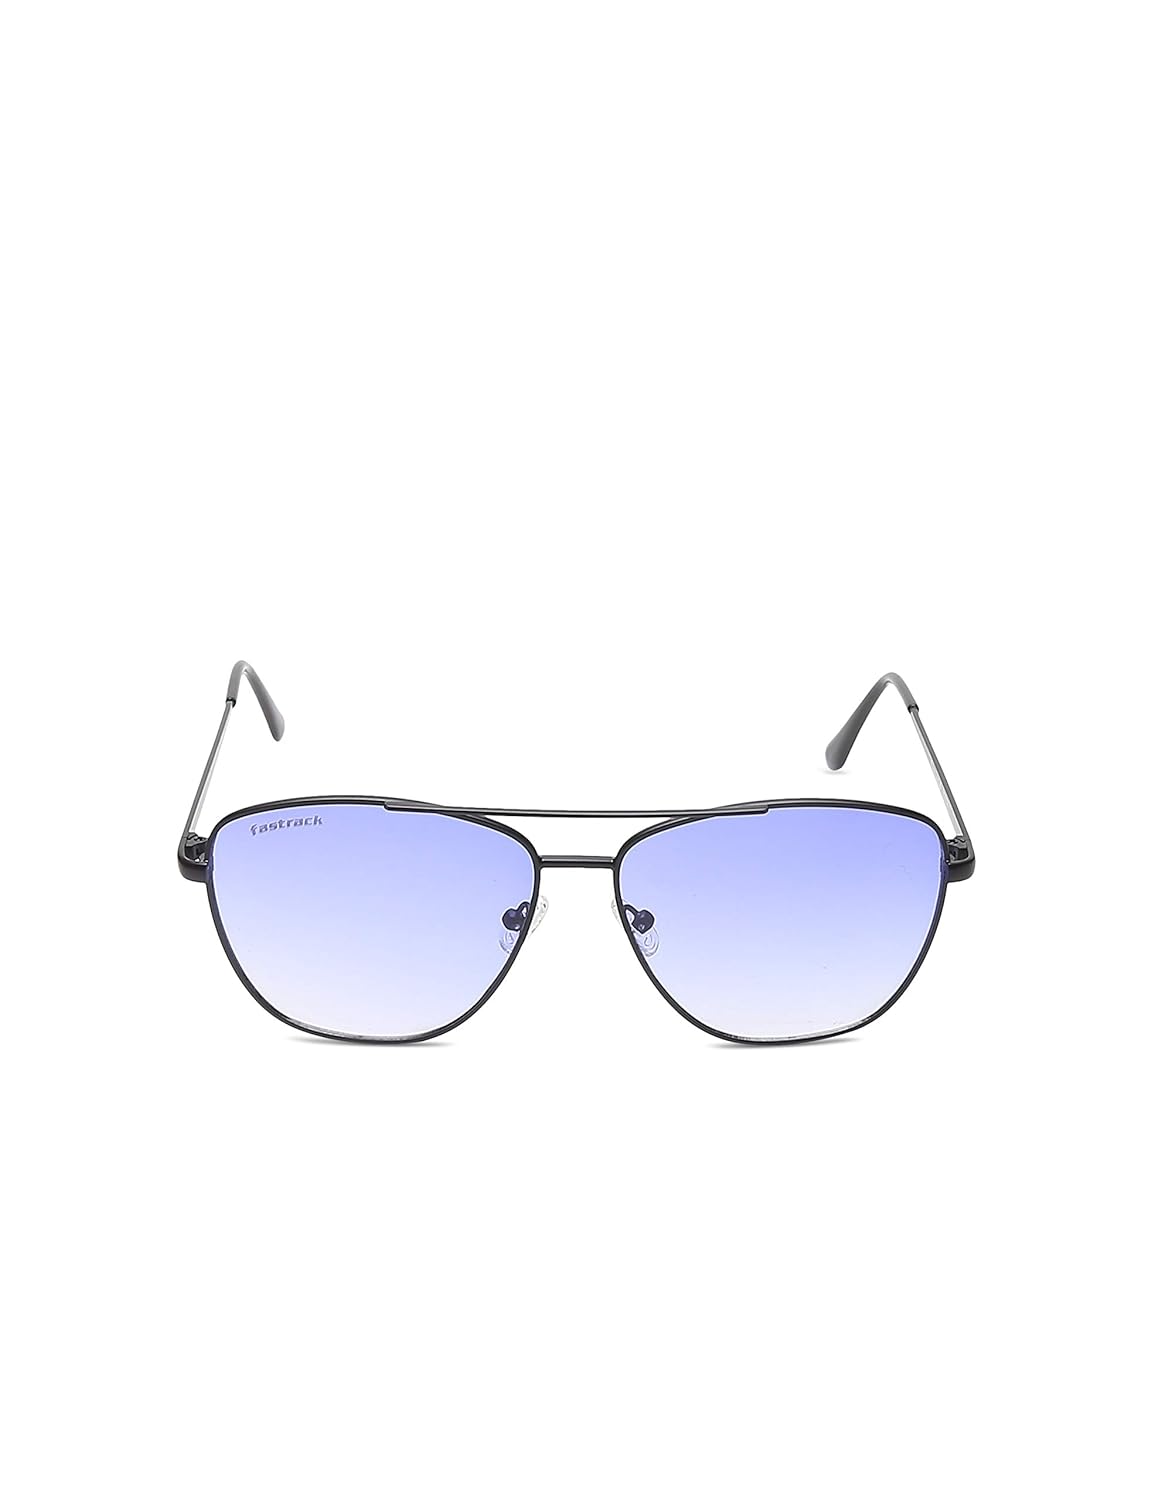 Fastrack Men's Gradient Blue Lens Pilot Sunglasses 